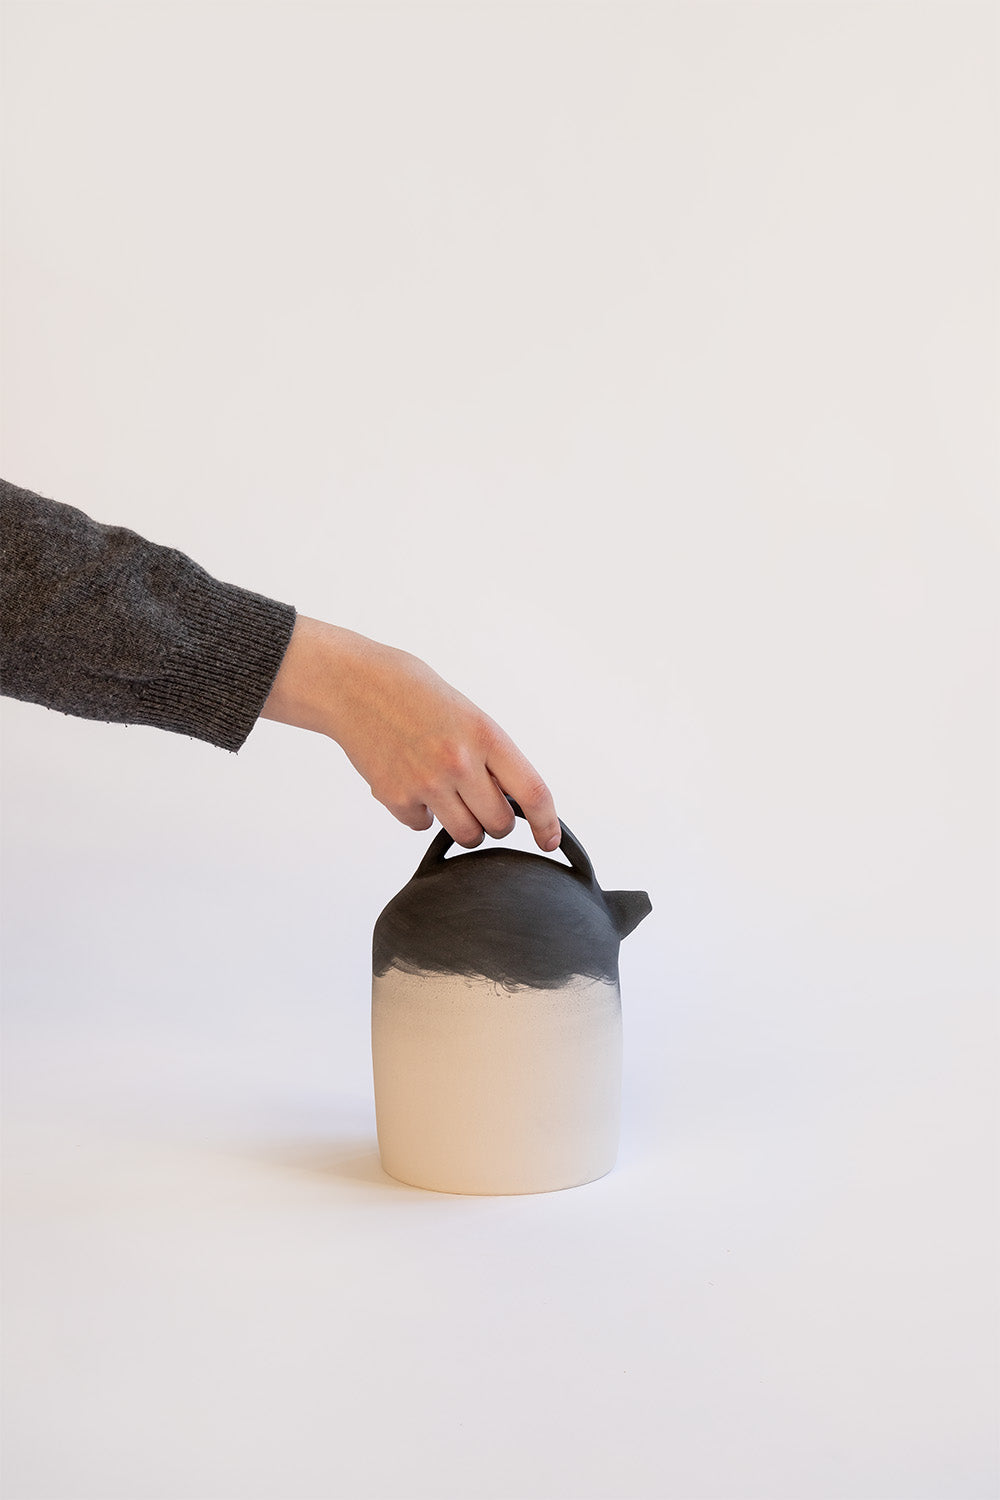 Artisanal earthenware pitcher